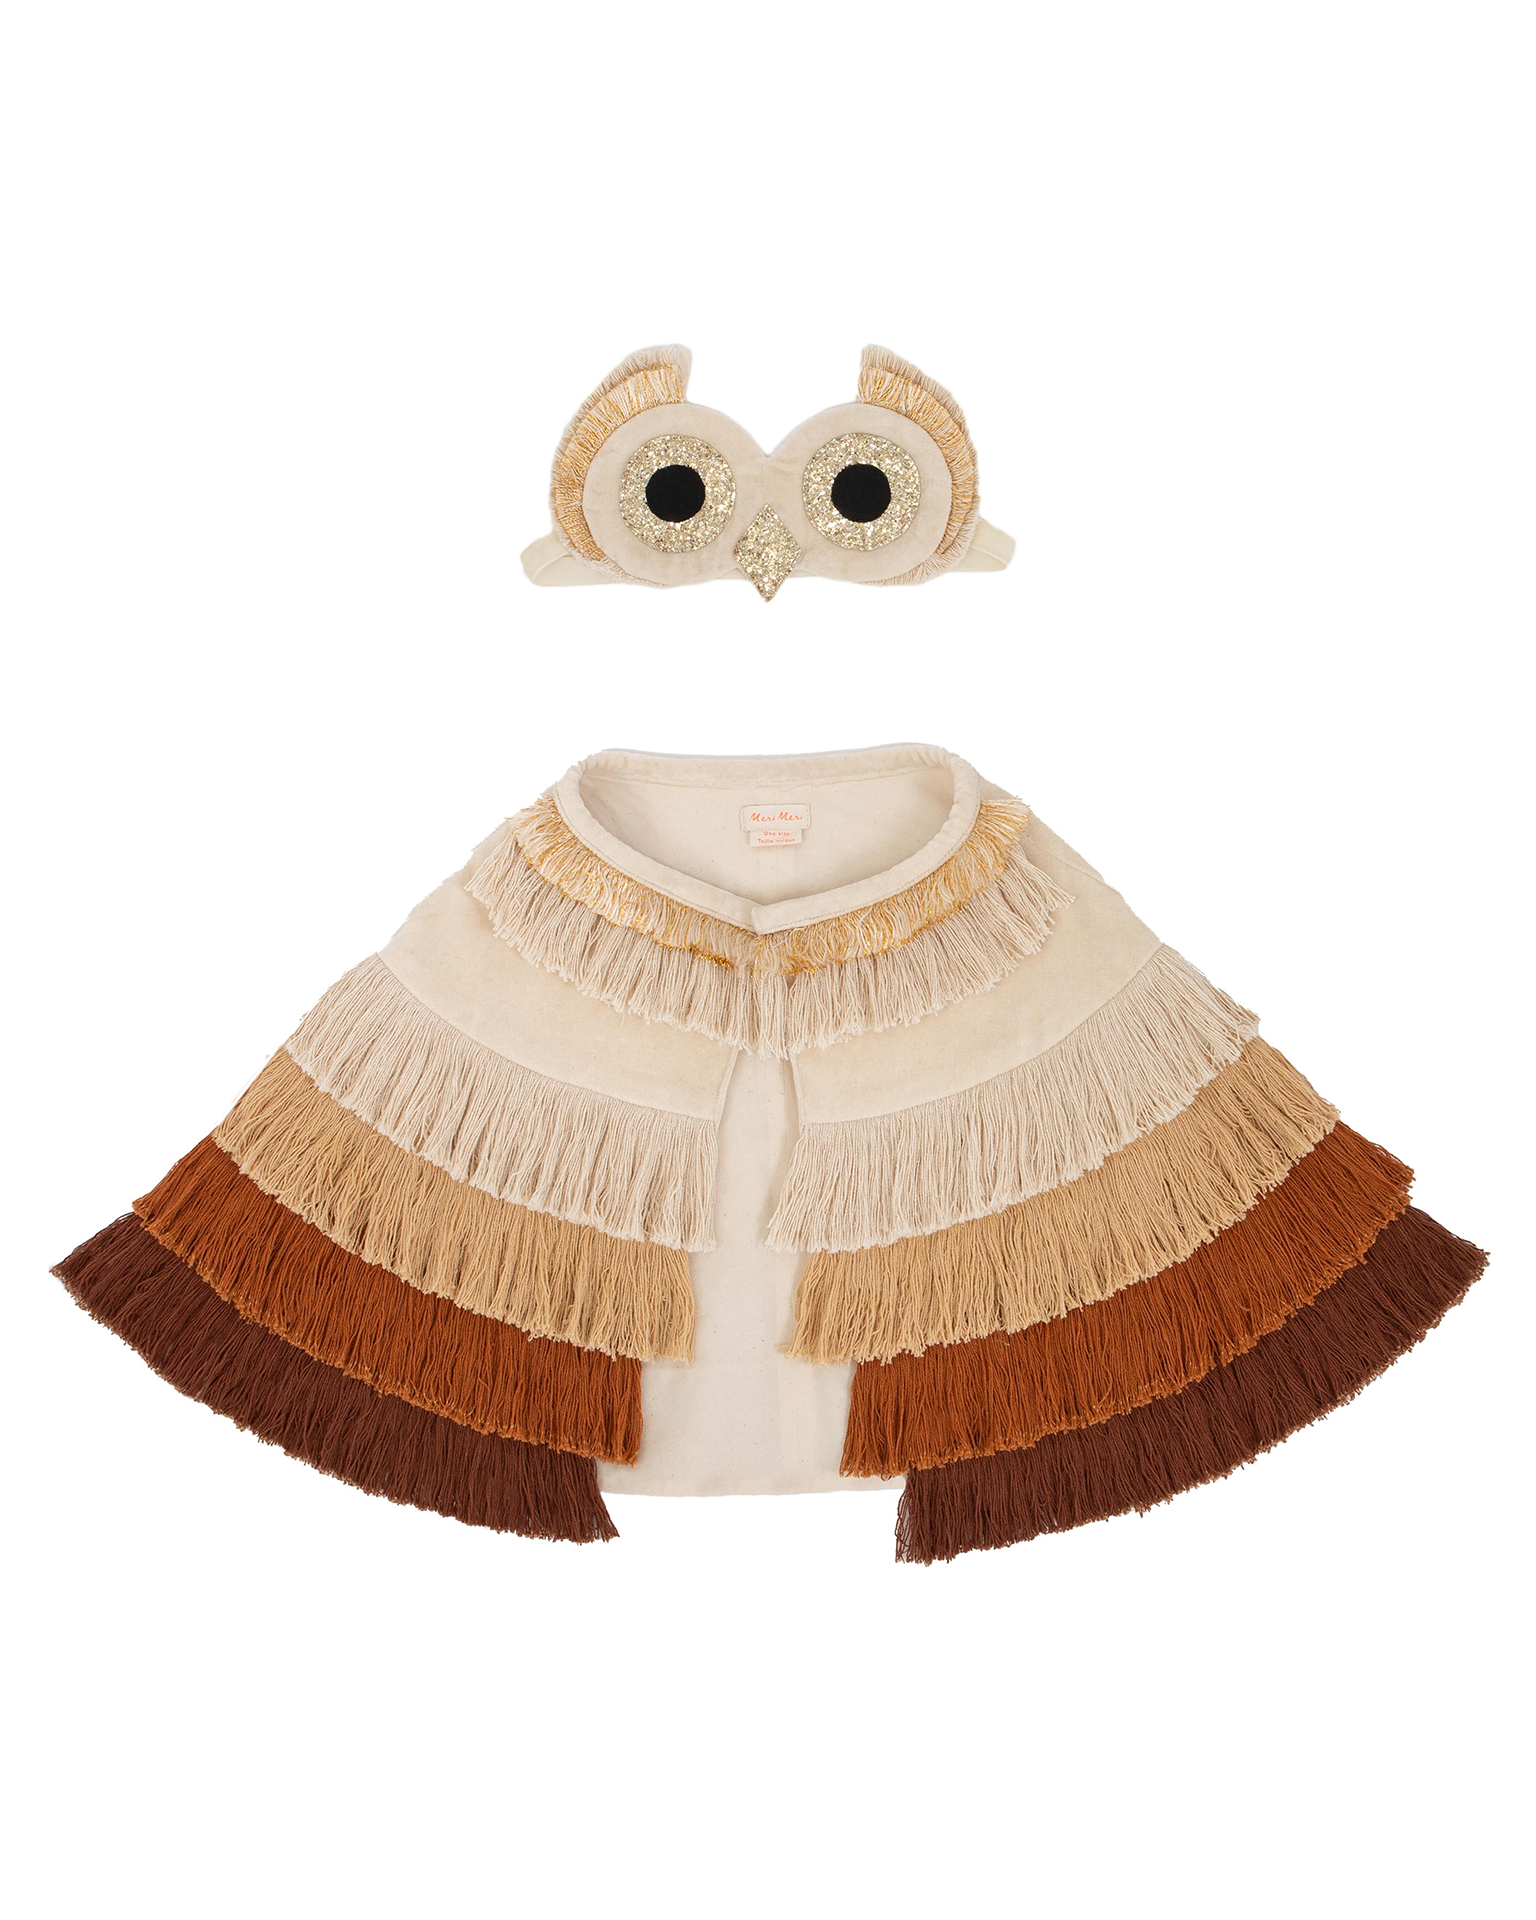 Little meri meri play owl dress up